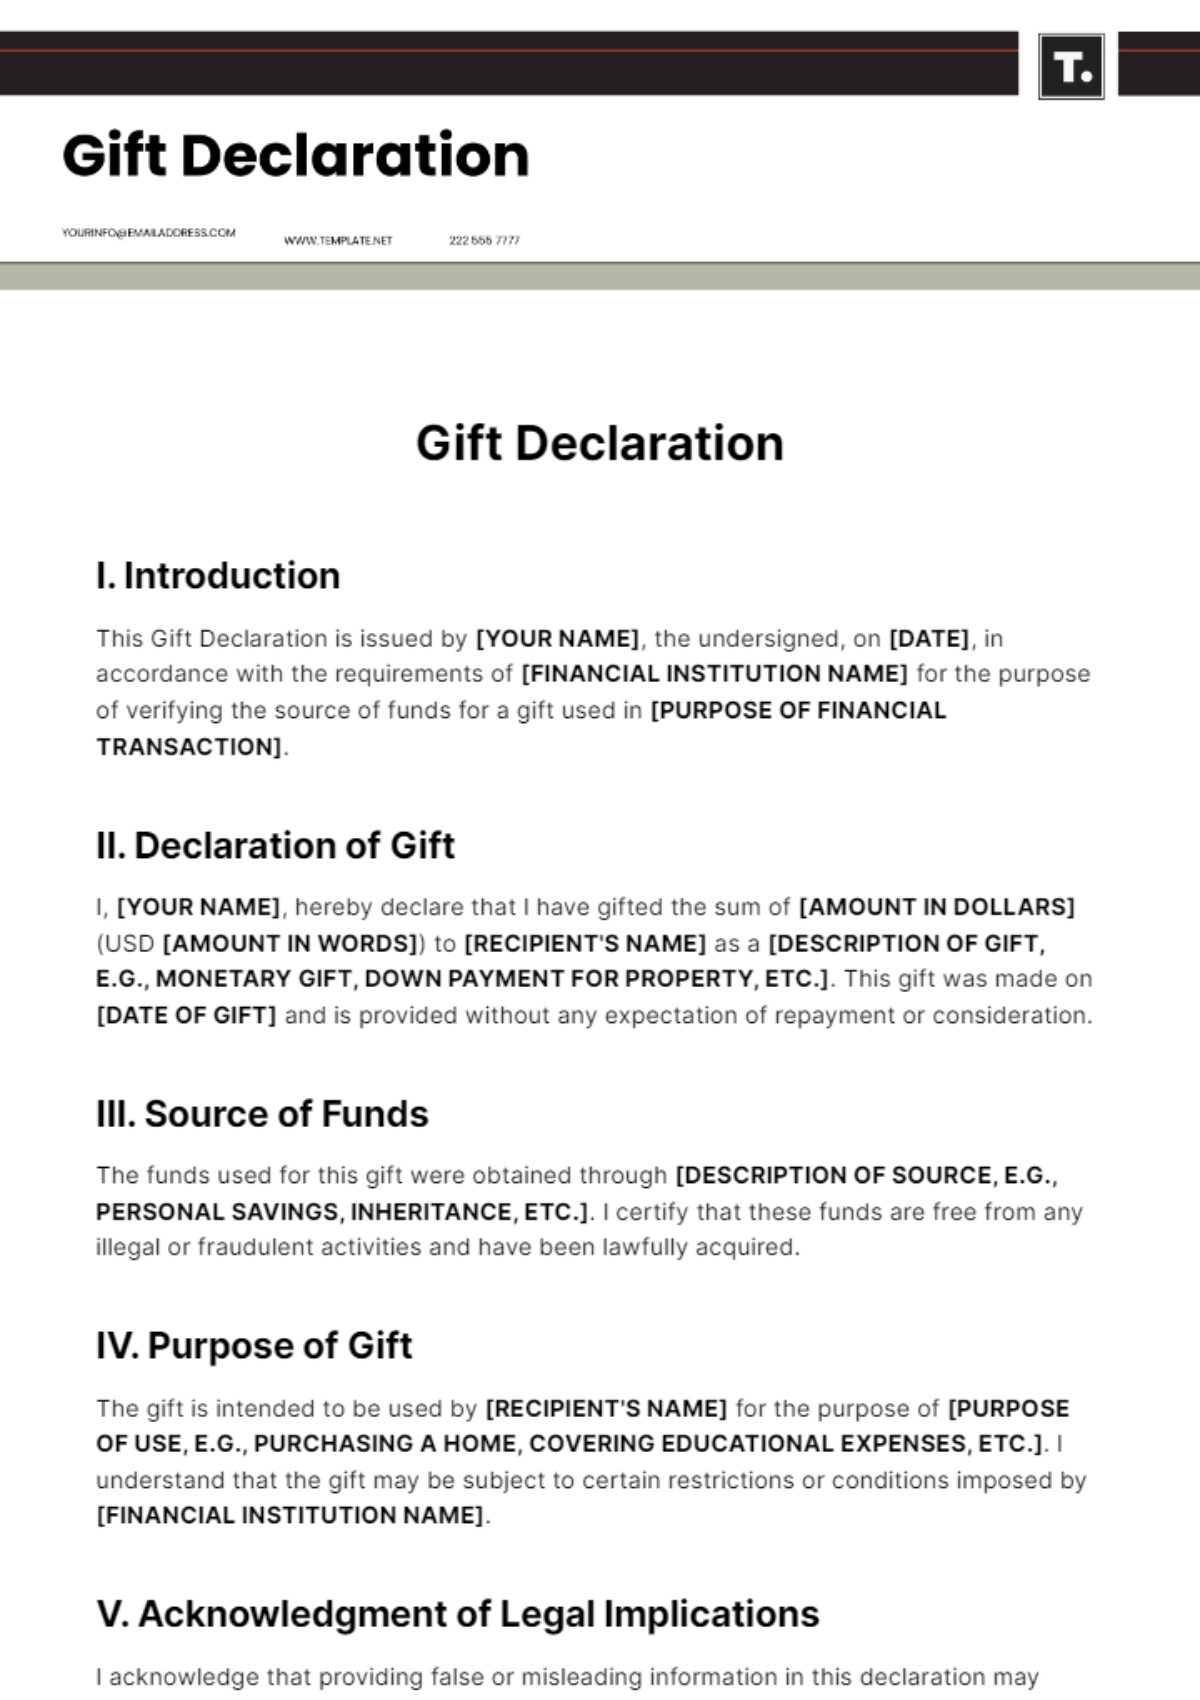 Gift Declaration Template